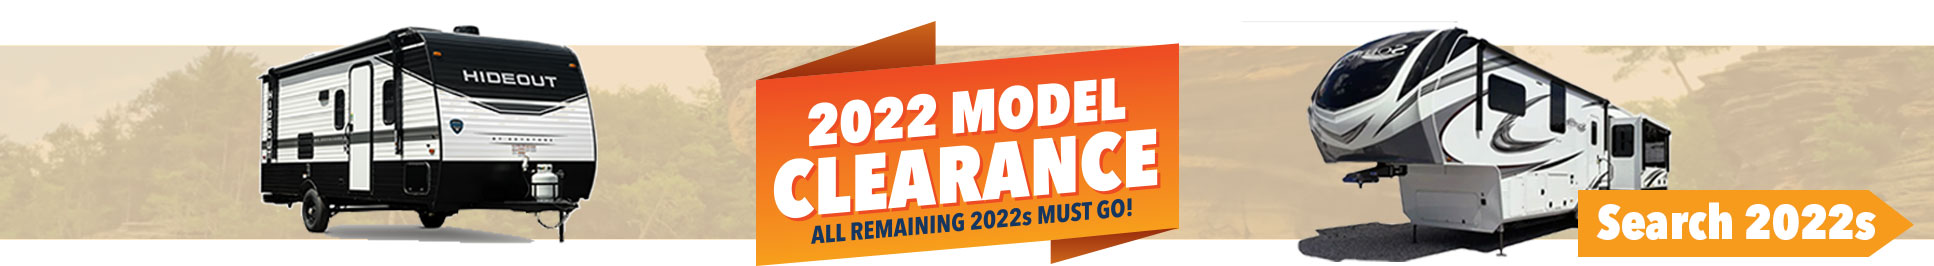 2022 Model Clearance